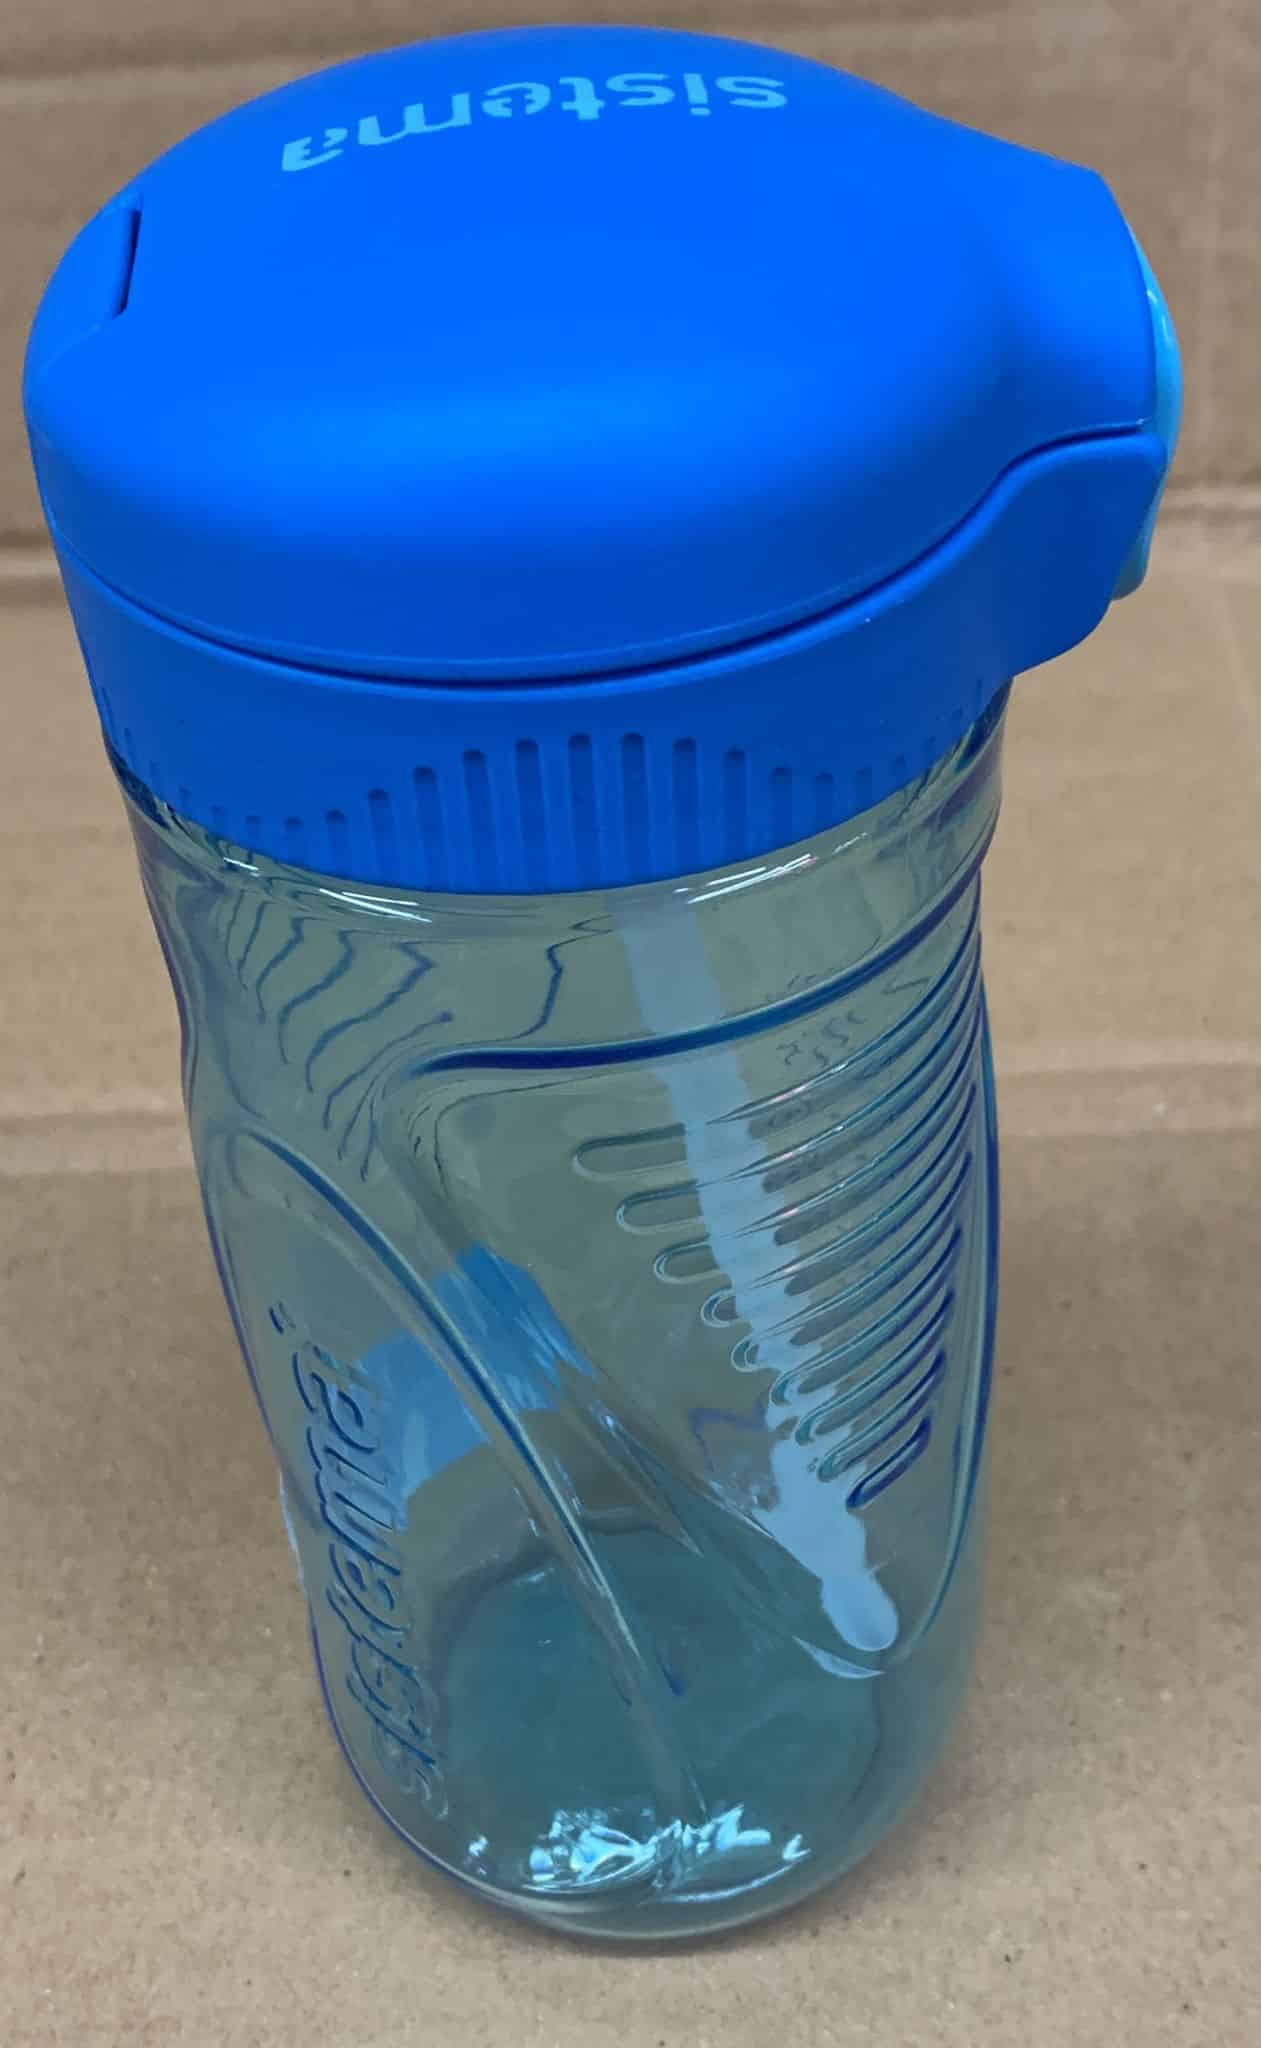 Sistema Tritan Quick Flip Water Bottle -0608